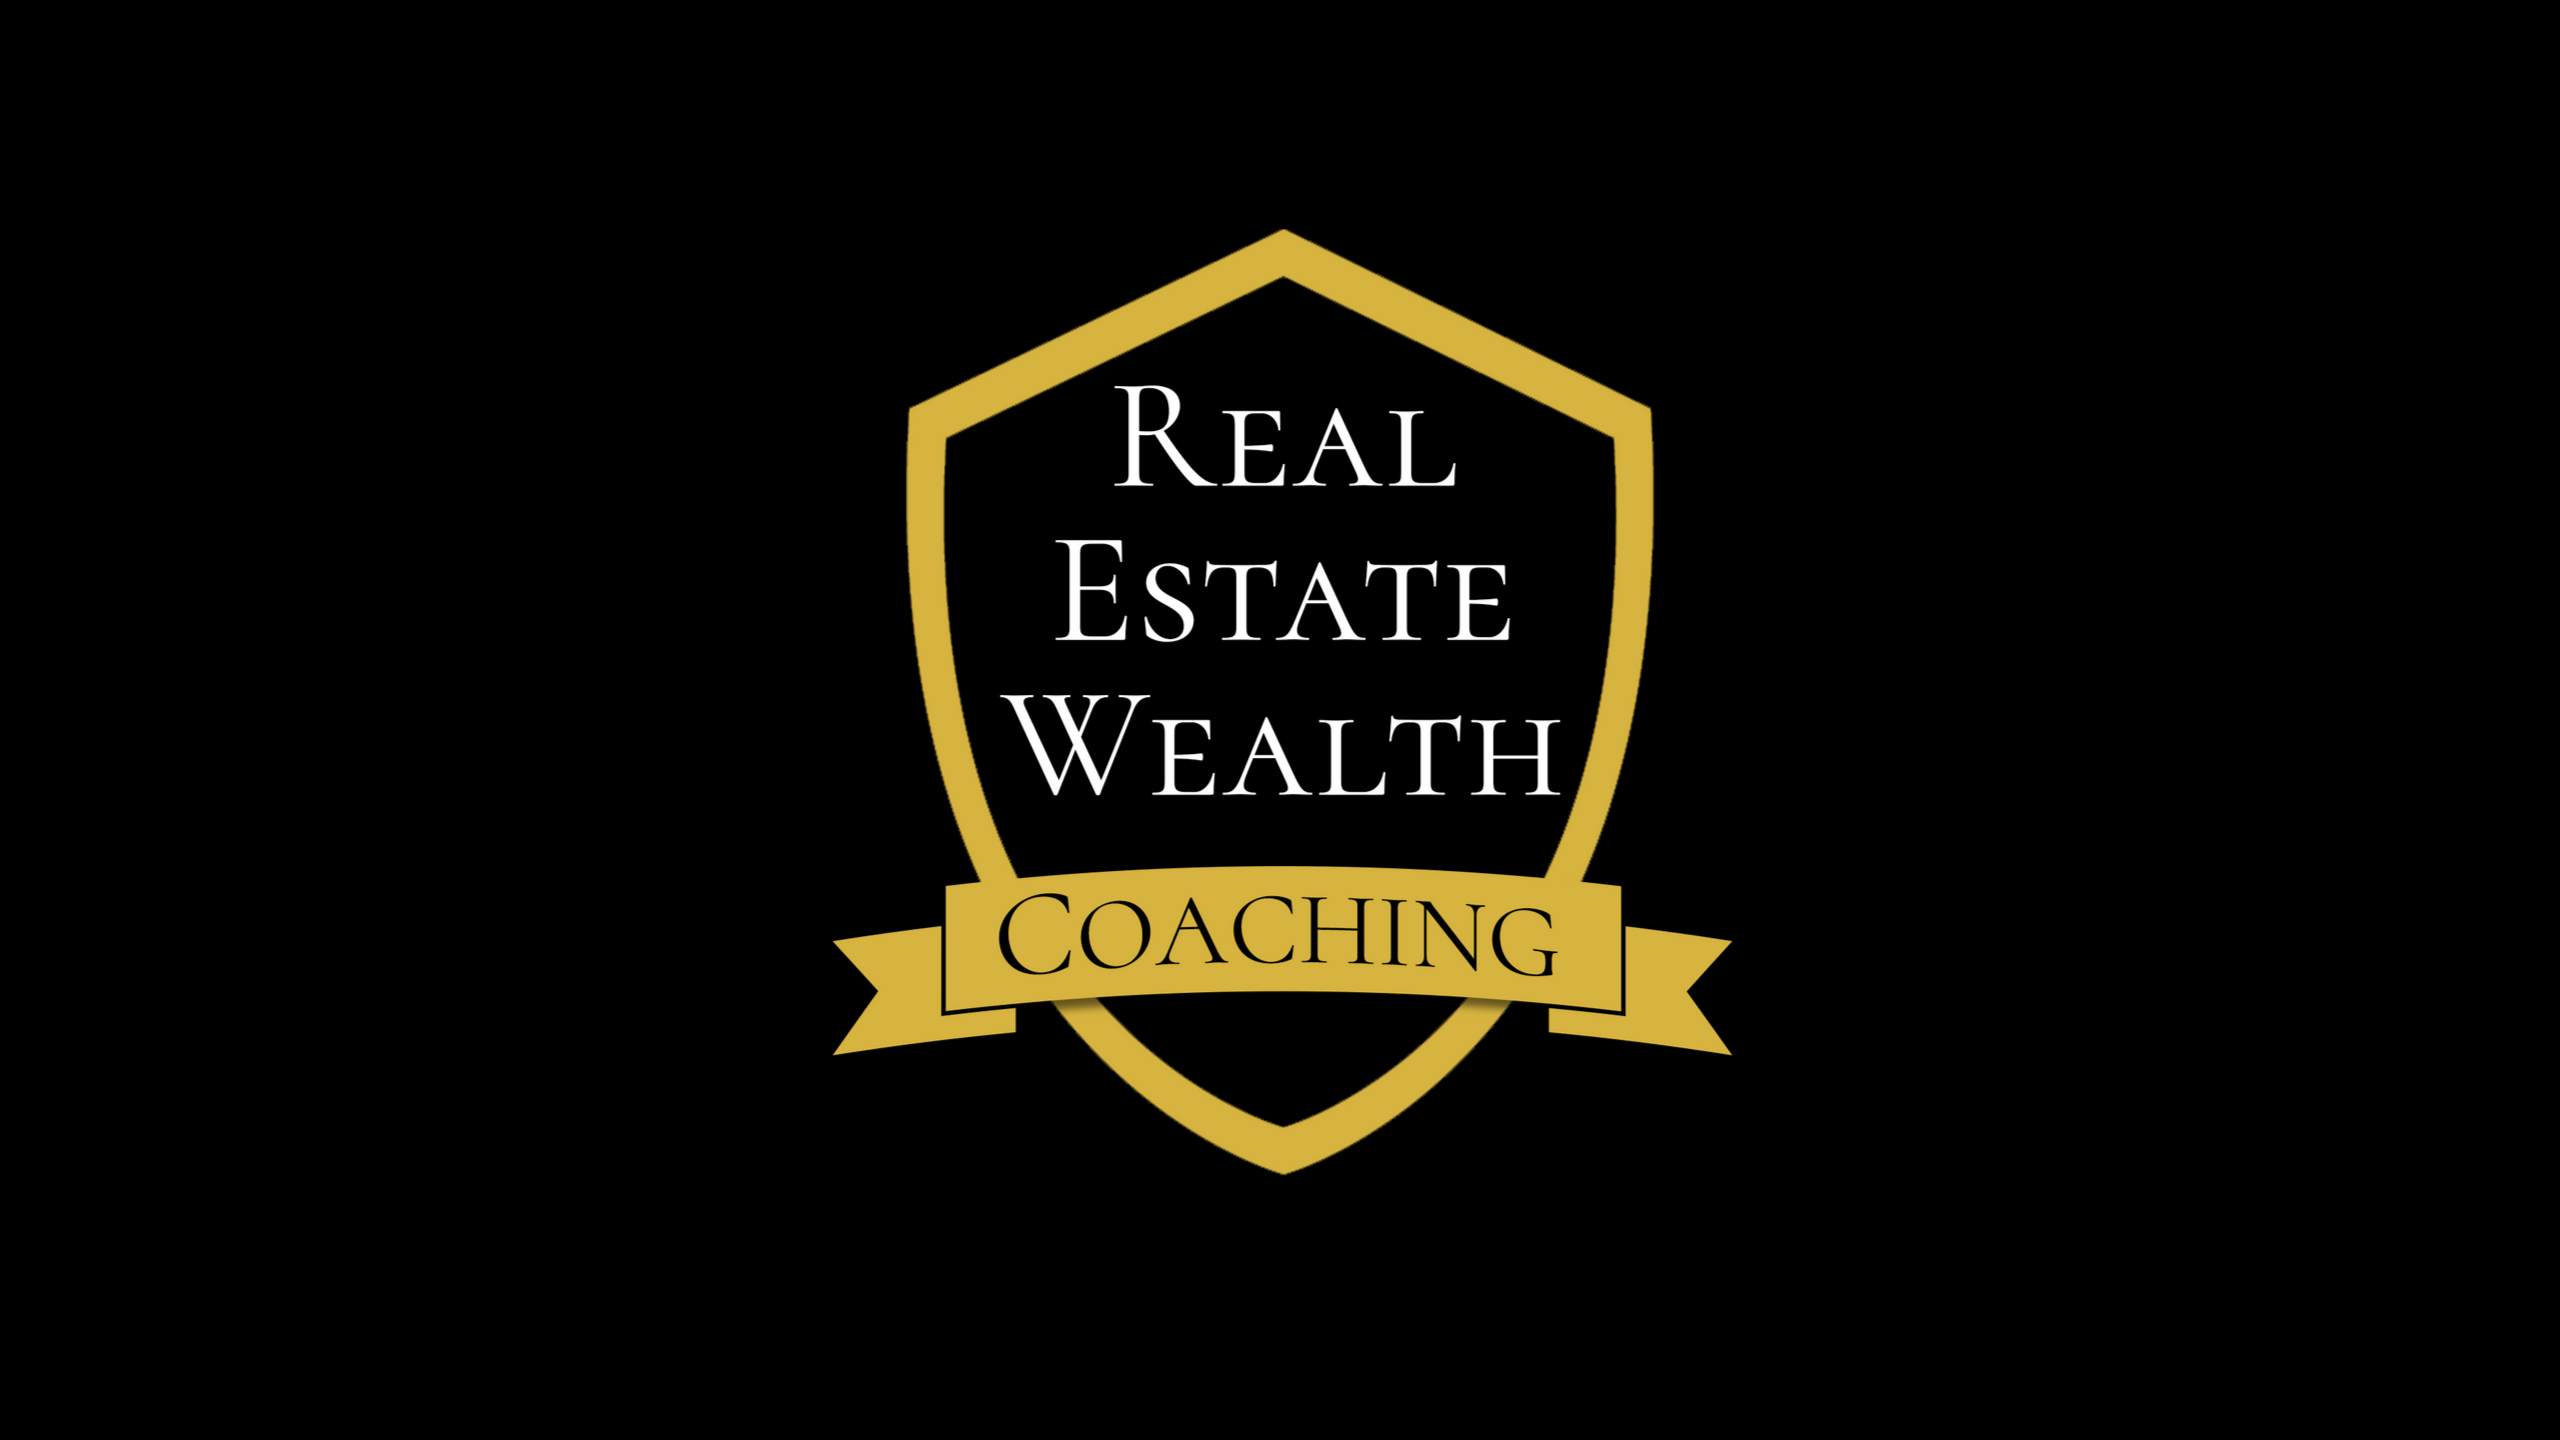 Real Esate Wealth Coaching